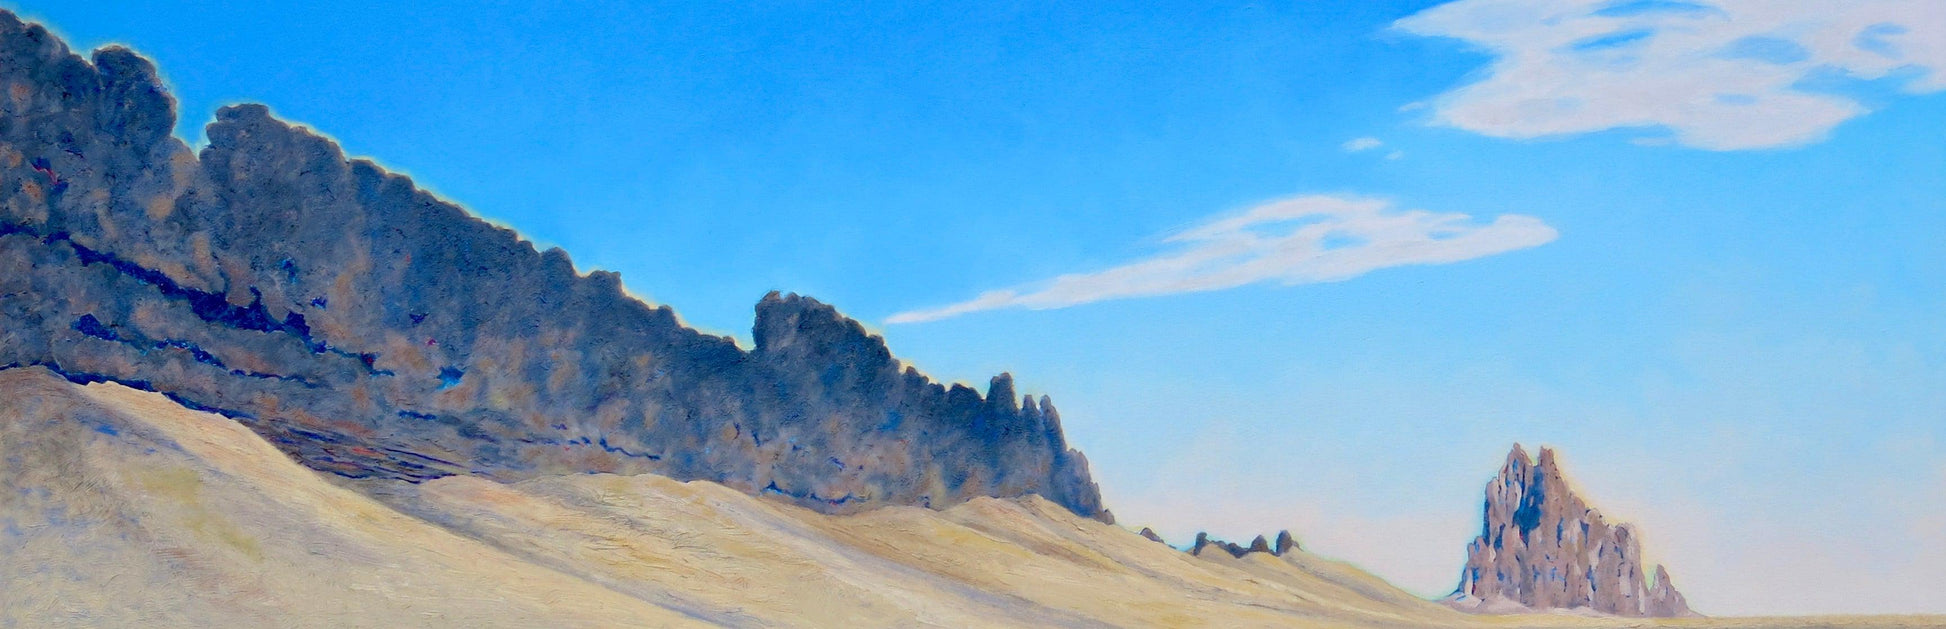 Shiprock II-Painting-David Knowlton-Sorrel Sky Gallery